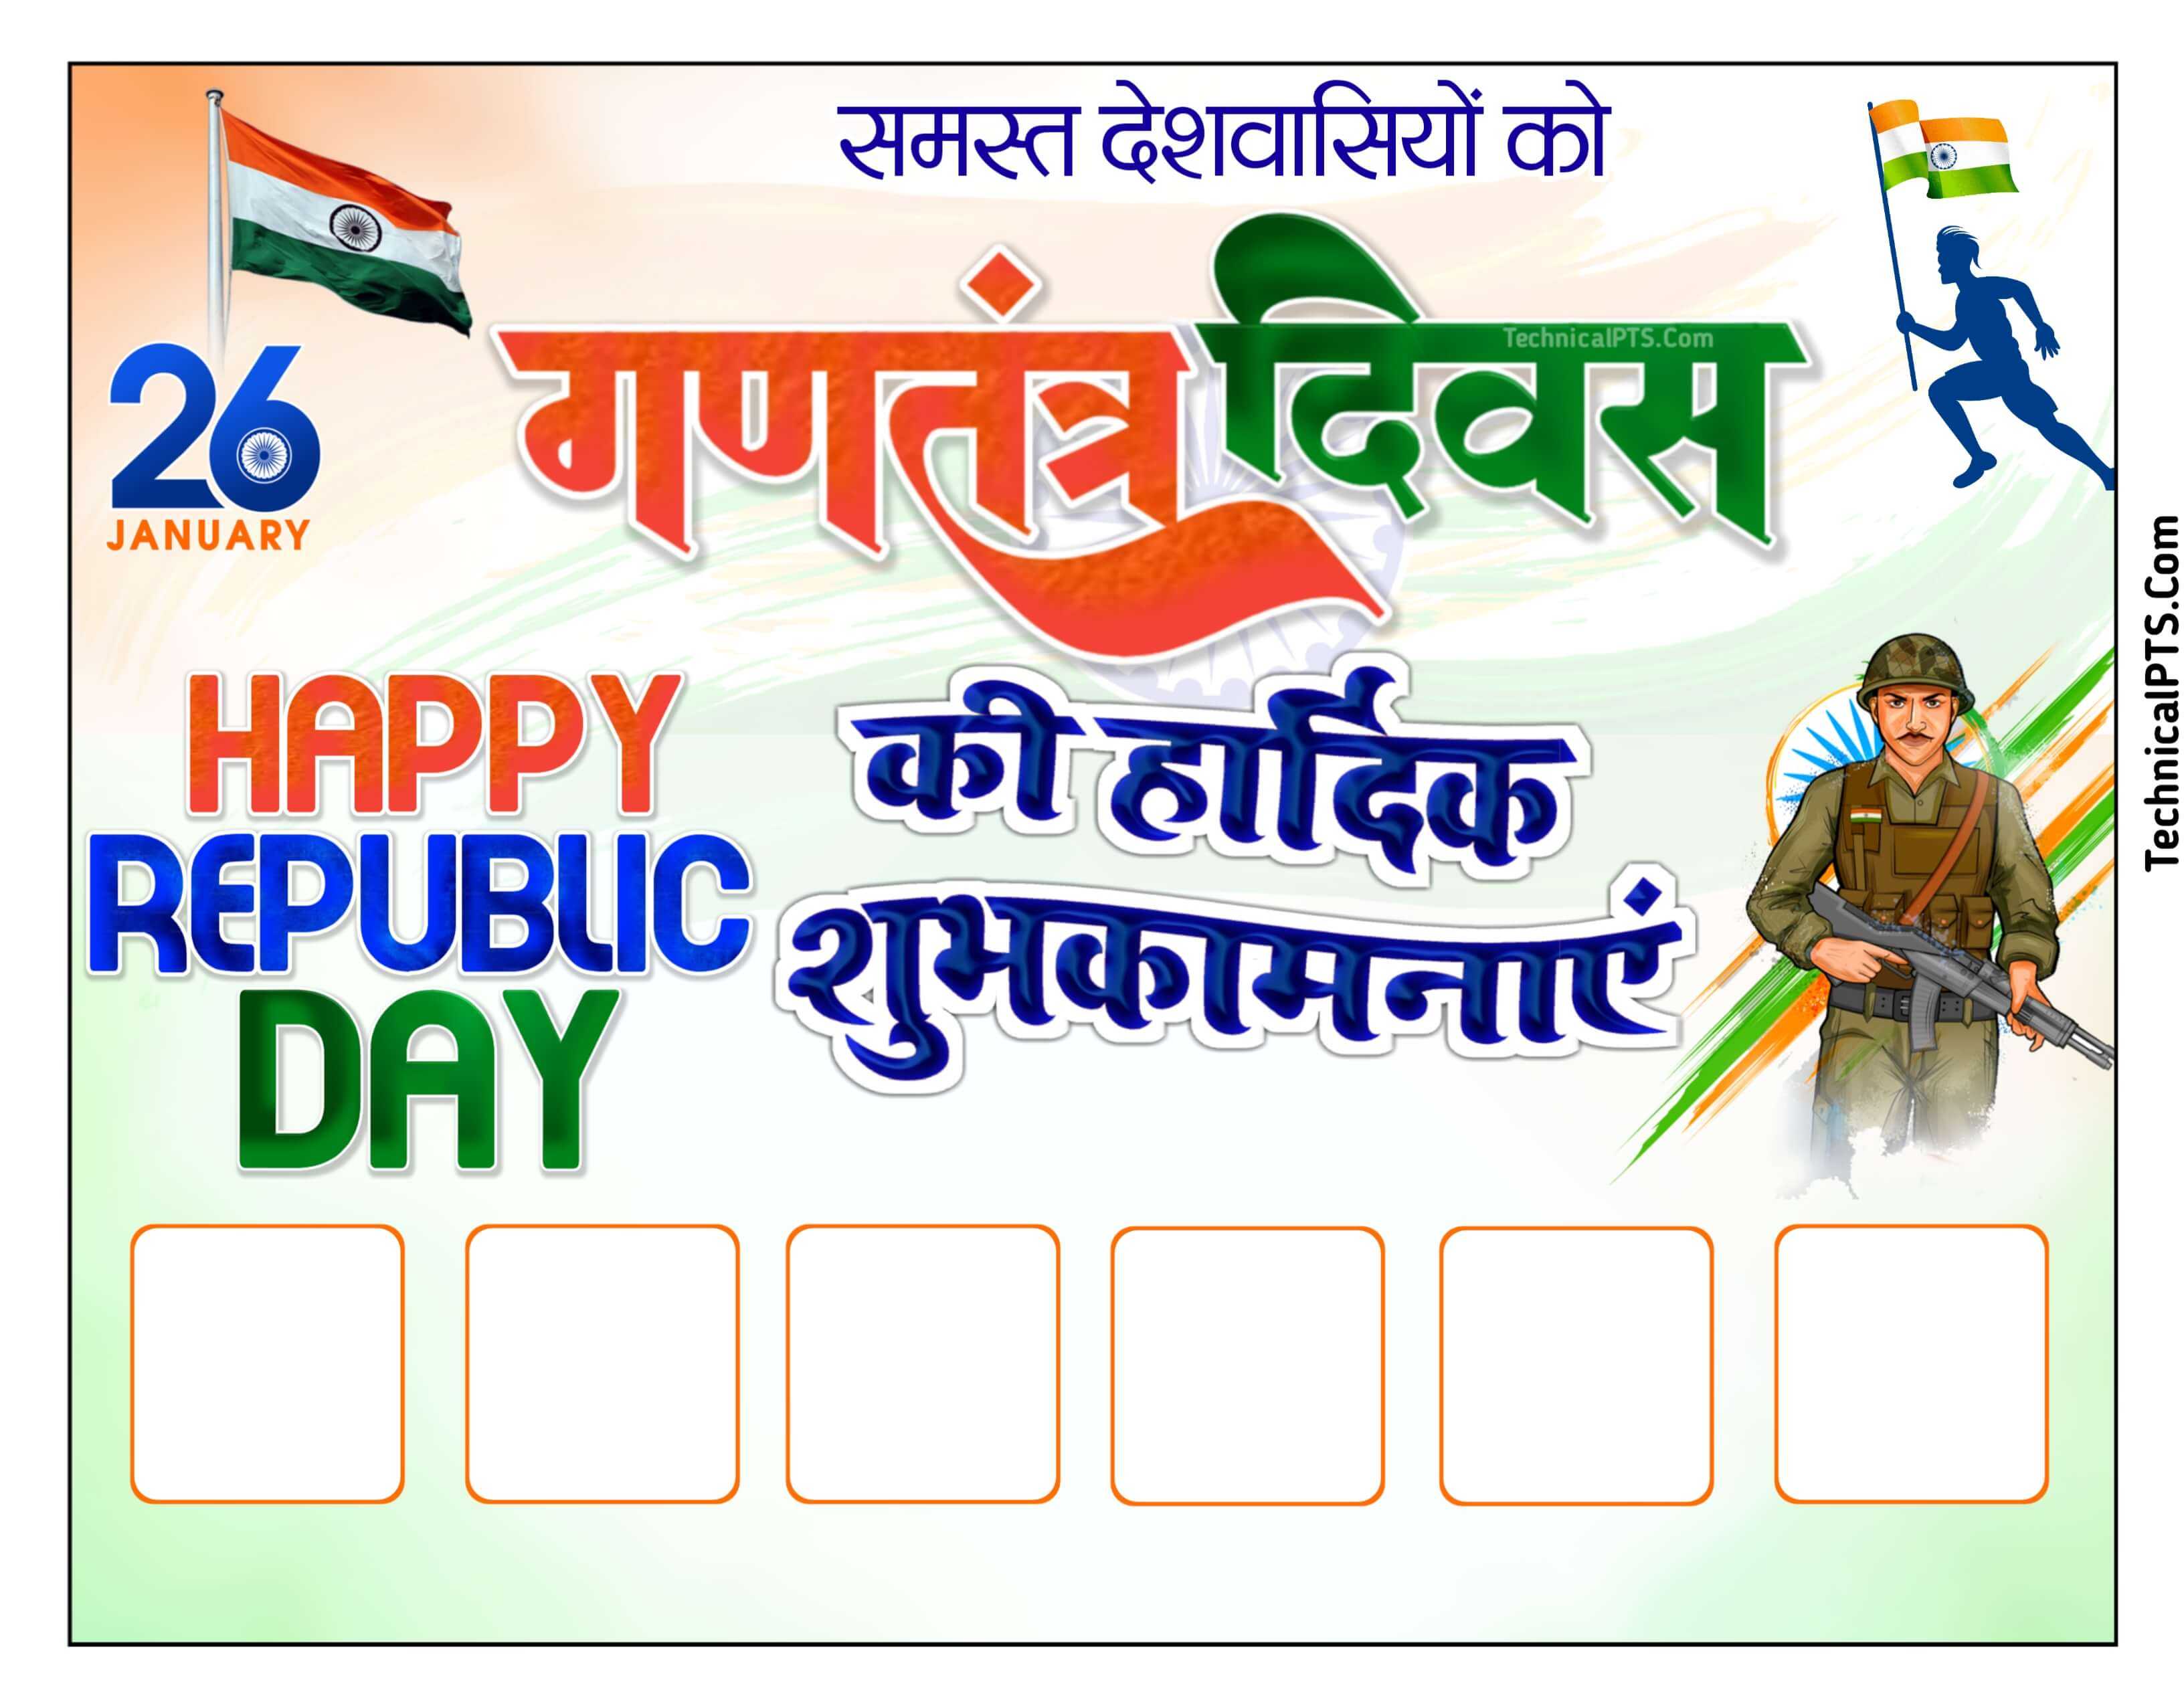 Republic Day group poster mobile se banaen| 26 January group poster plp file download| ganatantrata Divas group banner editing plp file